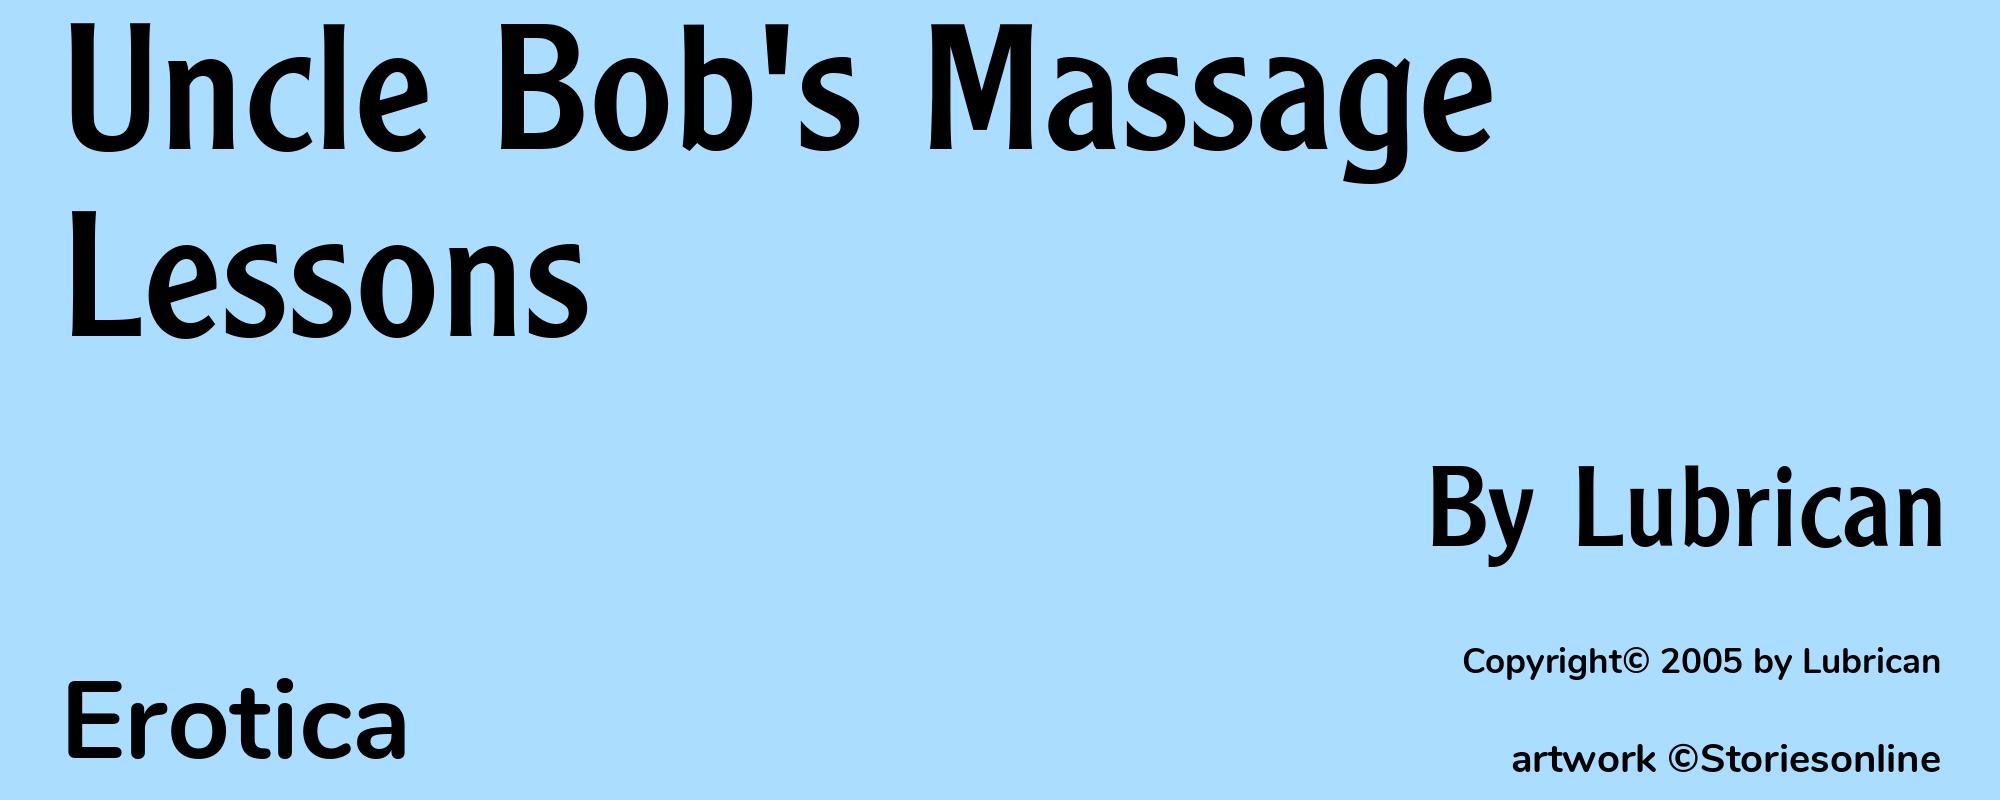 Uncle Bob's Massage Lessons - Cover